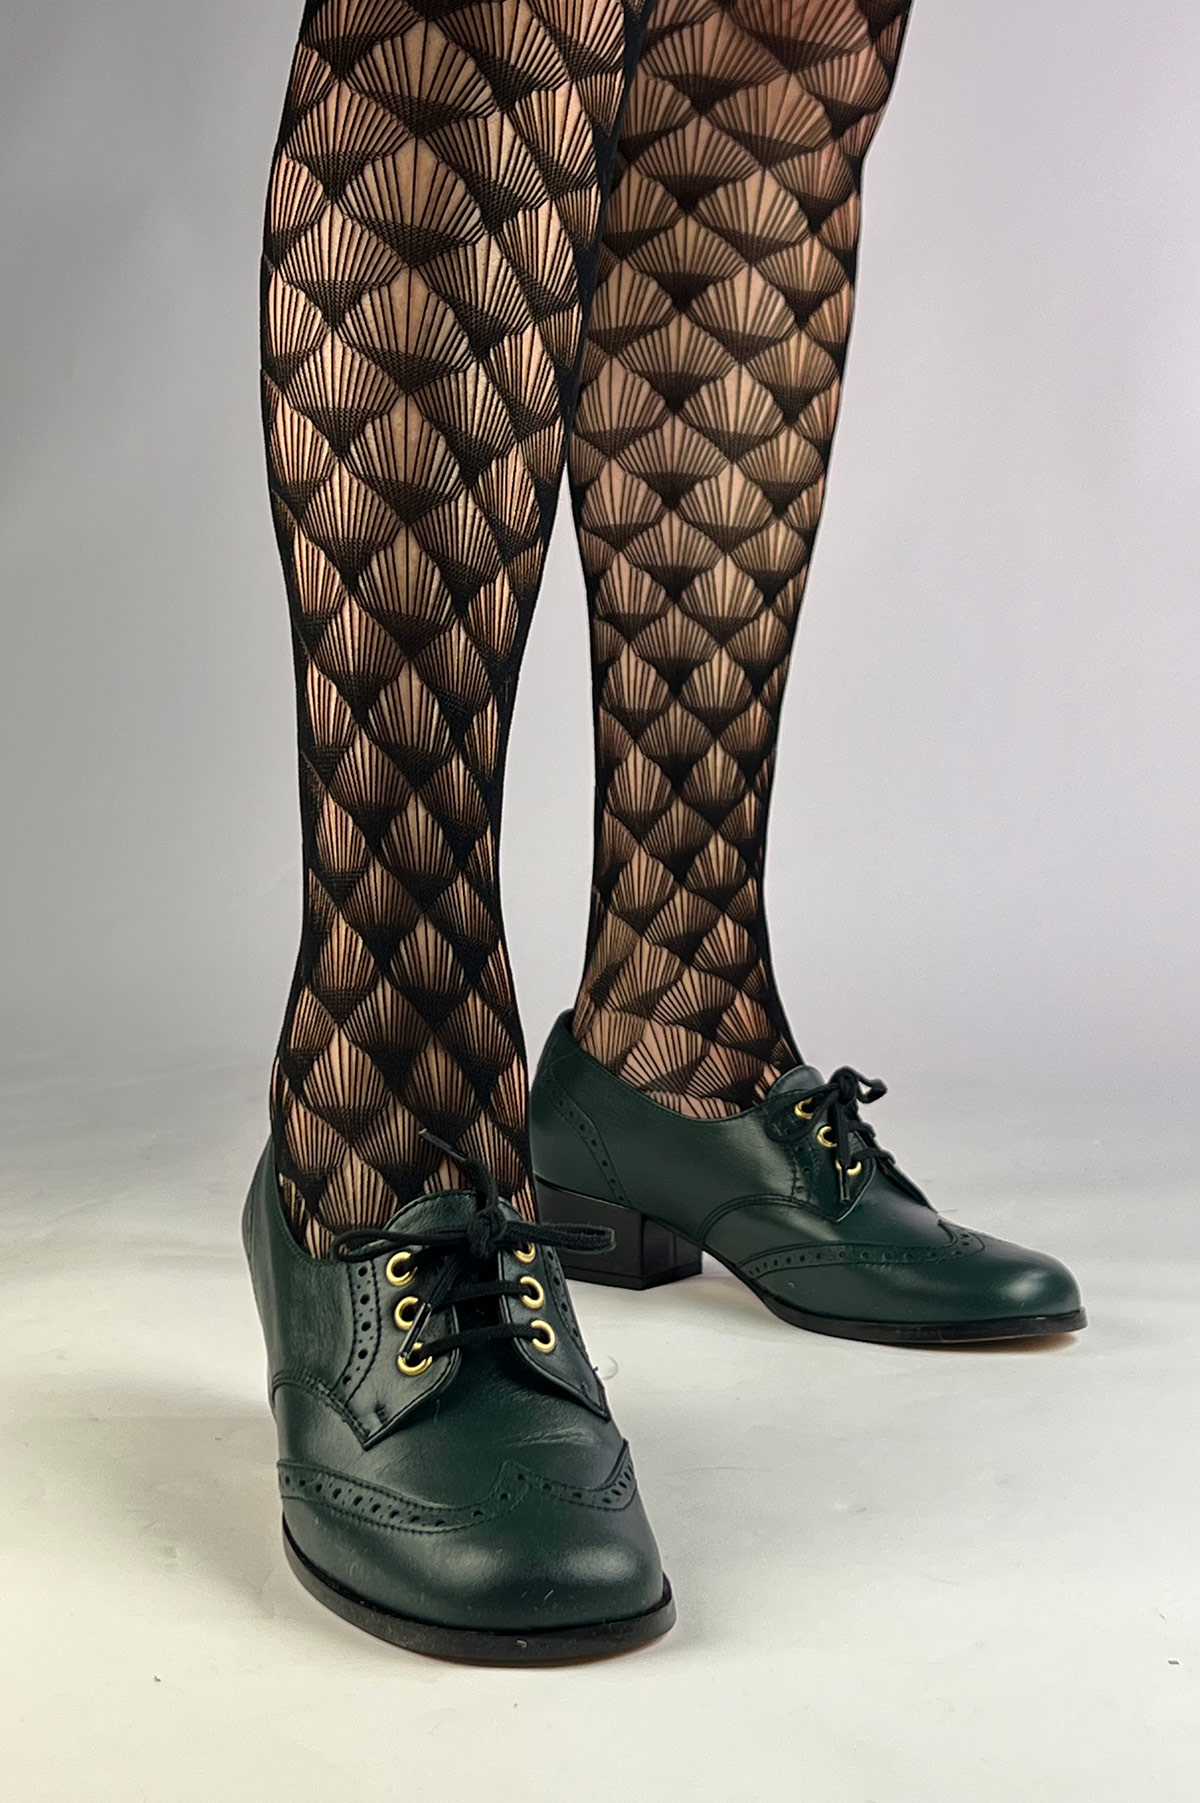 Deco Pattern Net Tights – ladies vintage retro 60s – 70s style – Mod Shoes